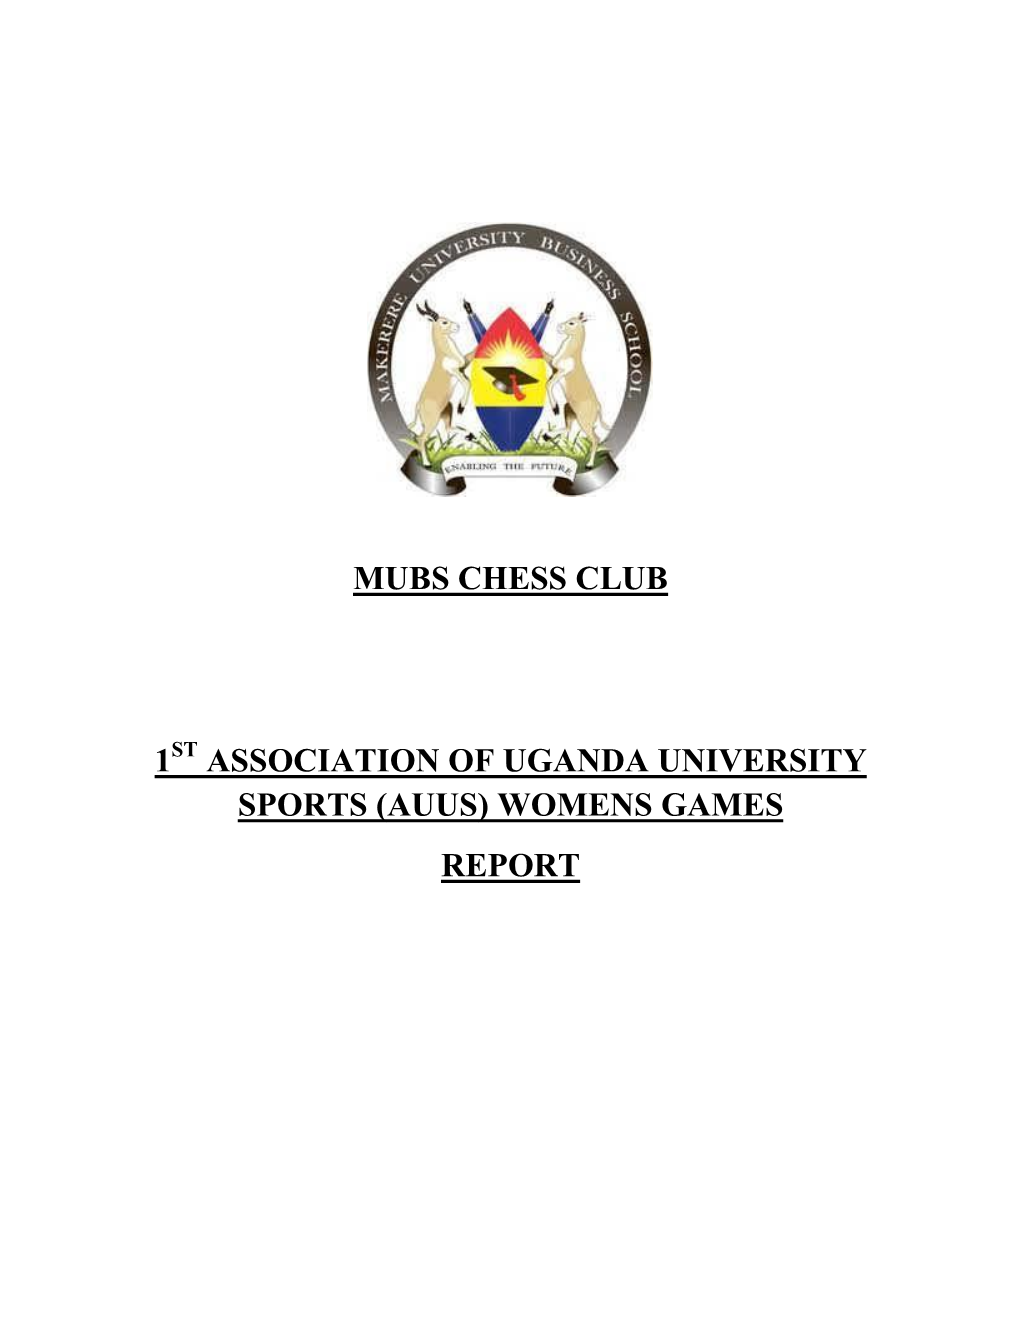 Association of Uganda University Sports (Auus) Womens Games Report